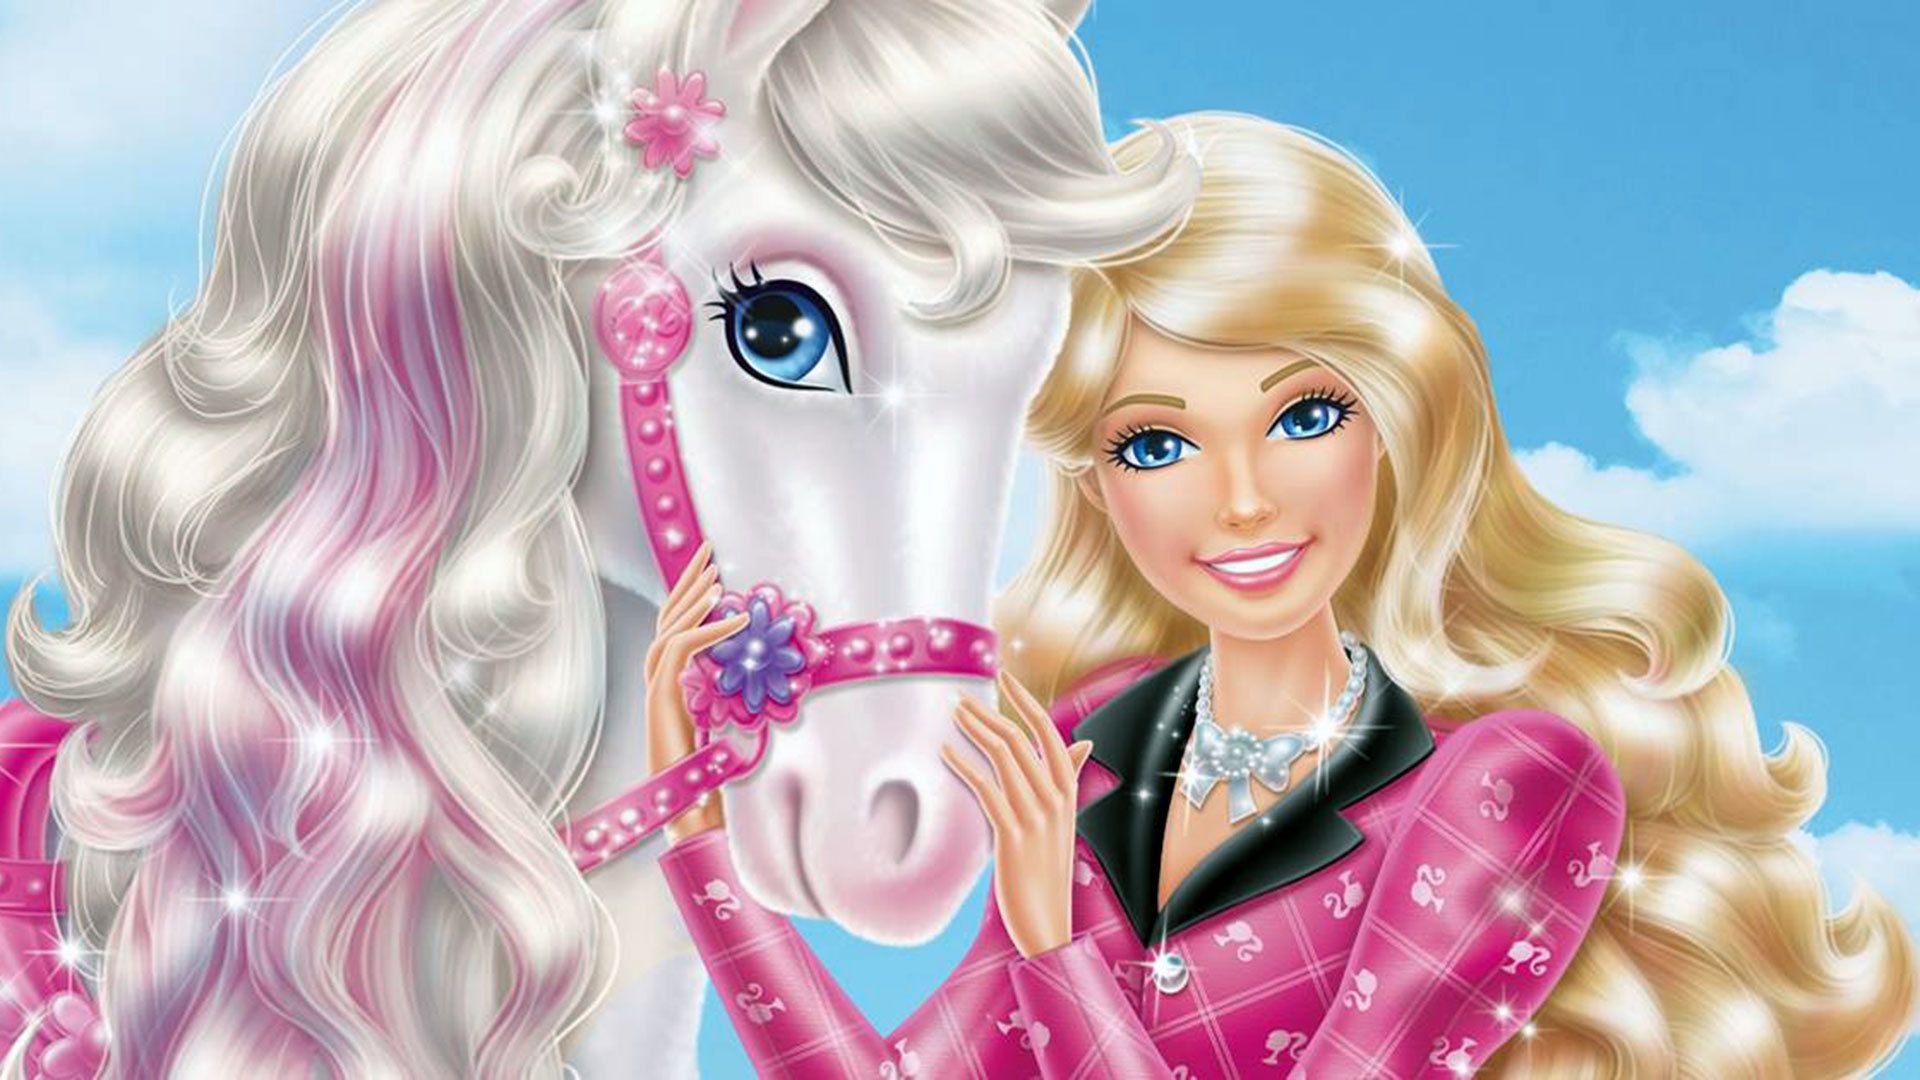 Download Barbie Mobile Wallpaper Gallery